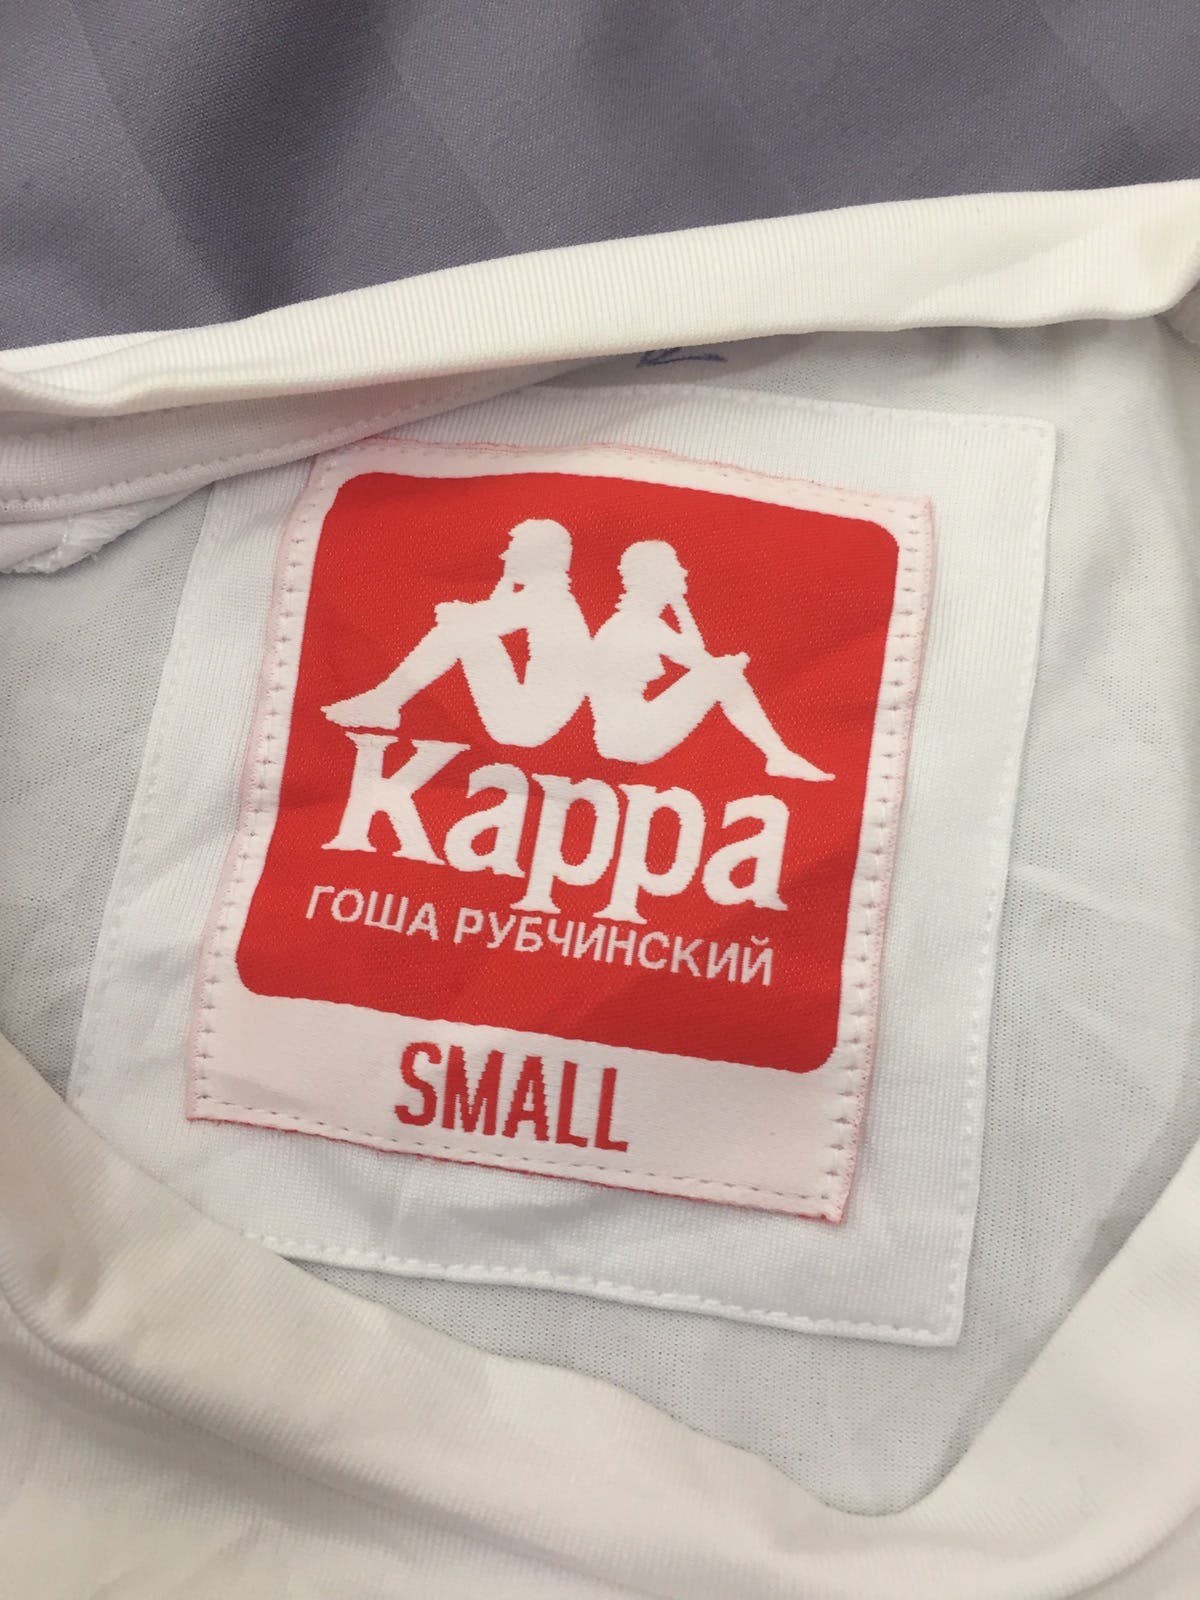 Kappa X gosha rubchinskiy jersey - 5